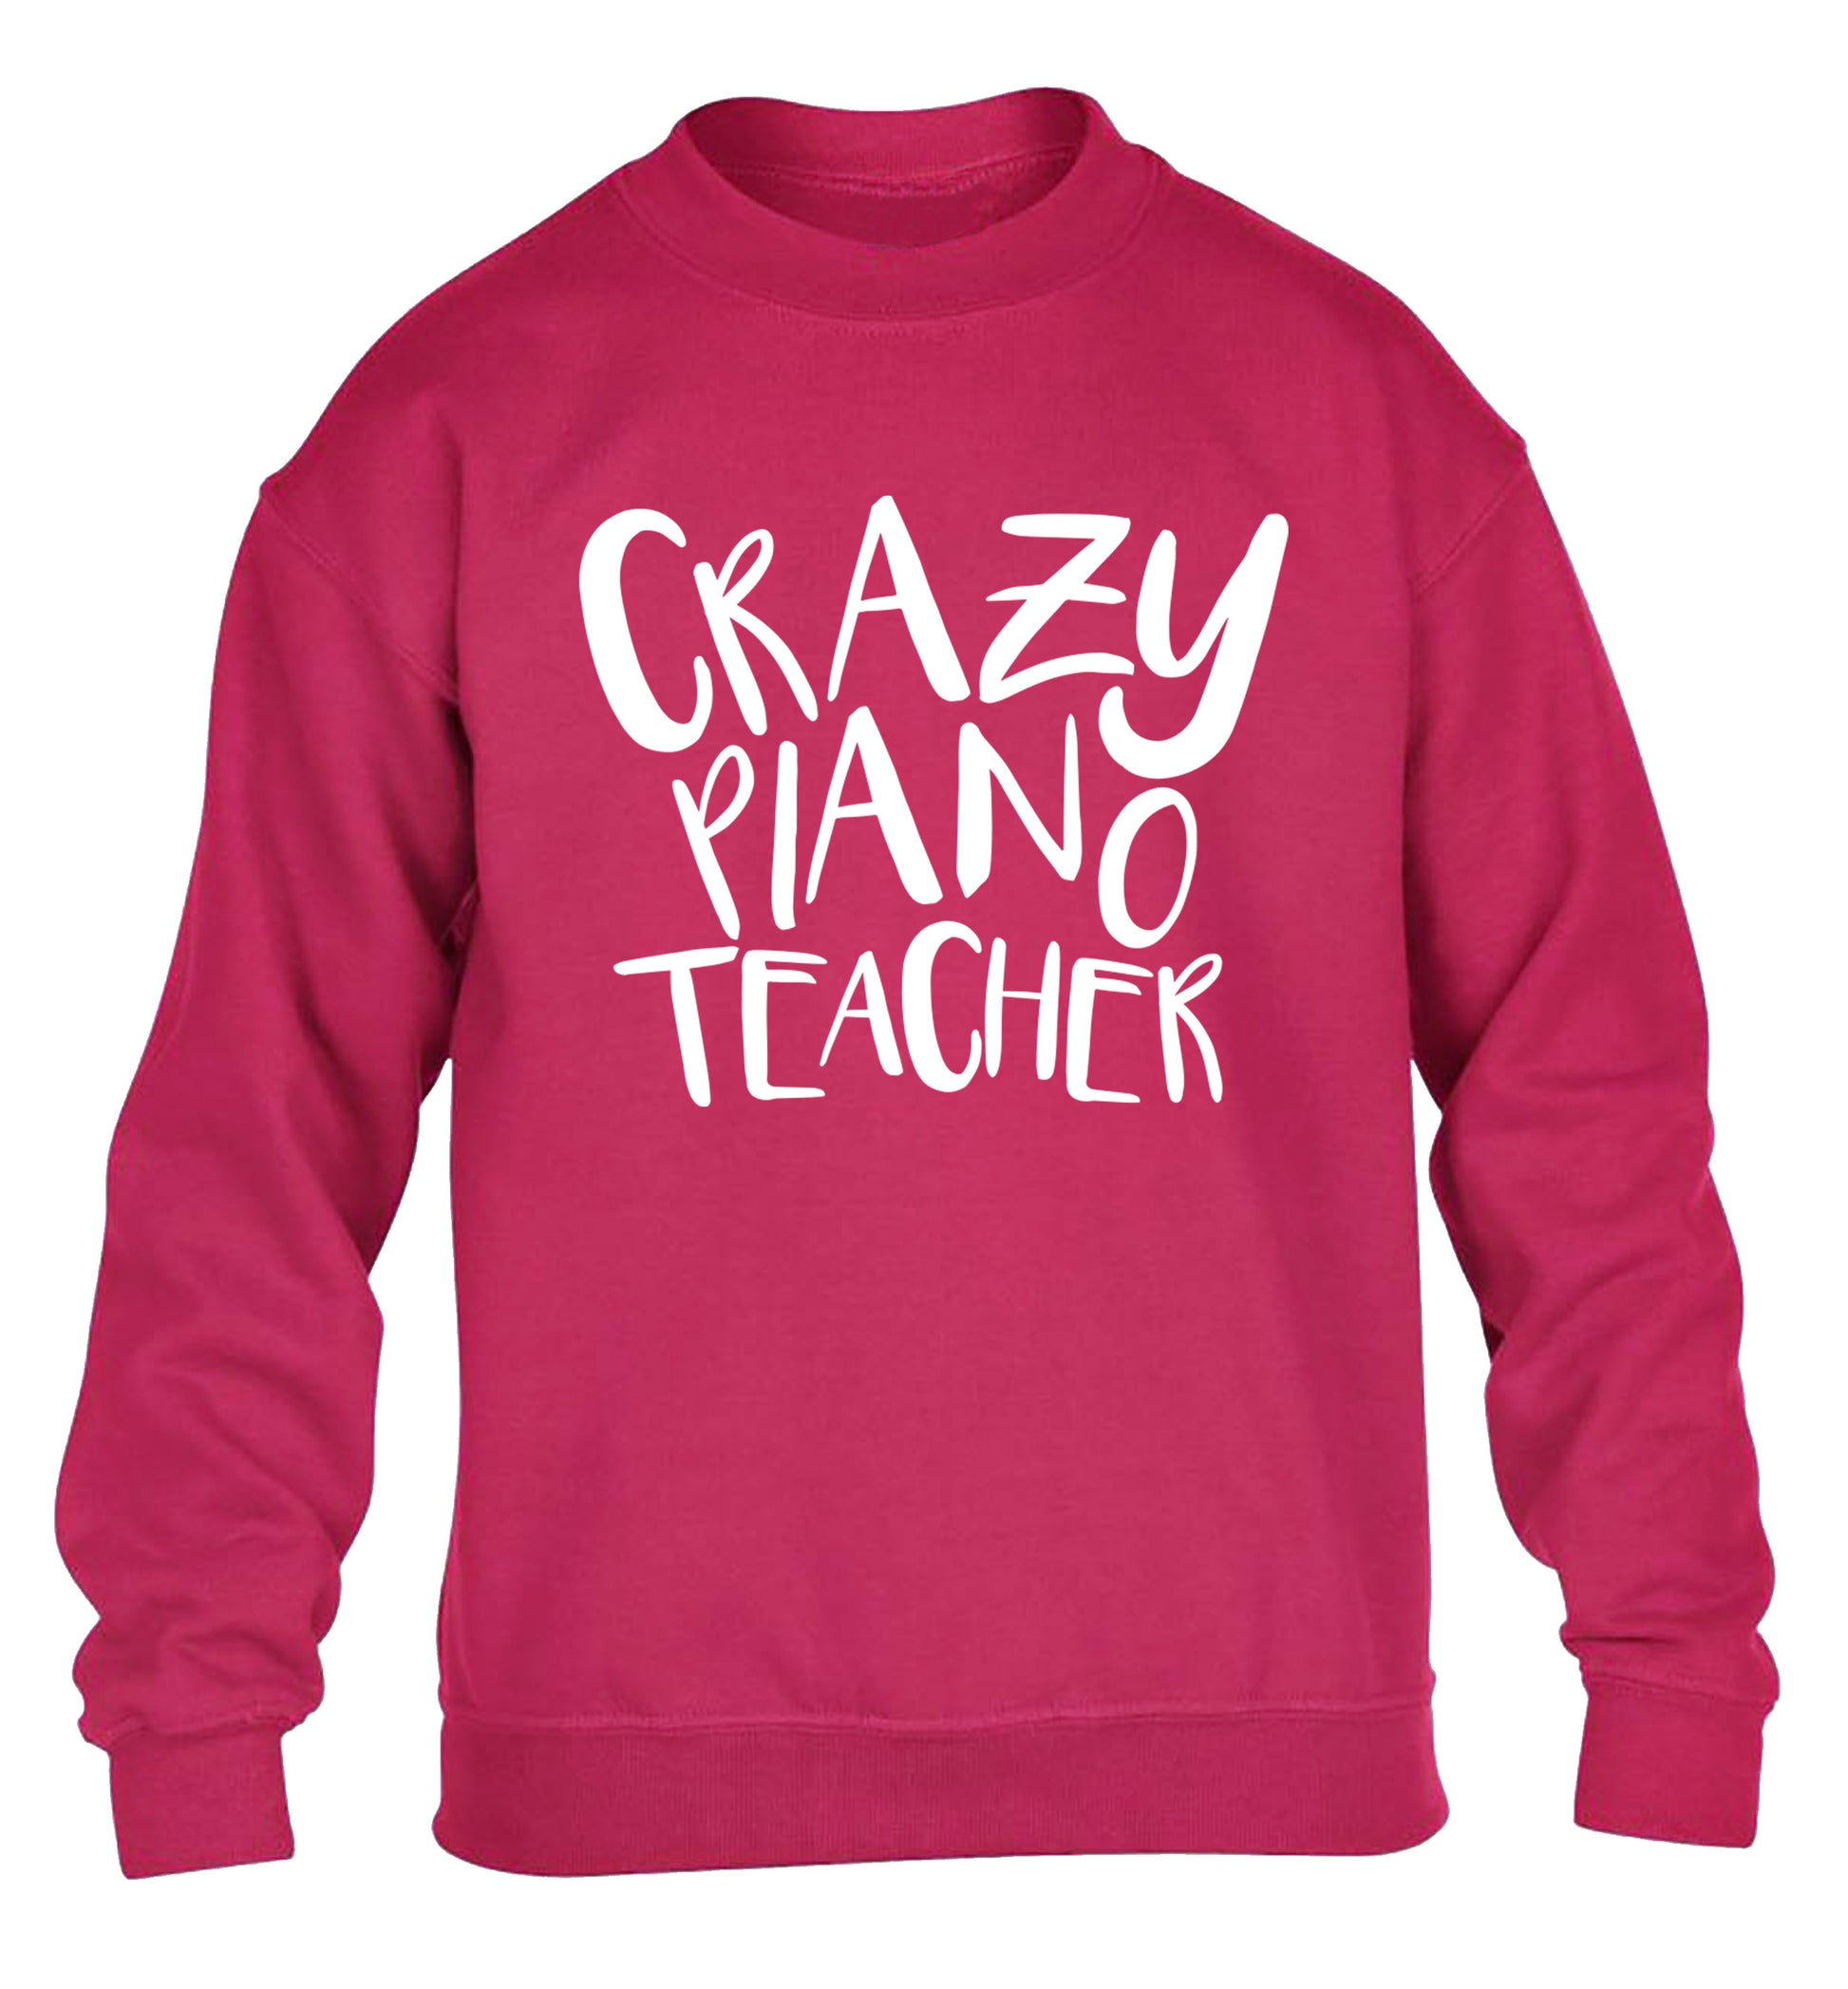 Crazy piano teacher children's pink sweater 12-13 Years